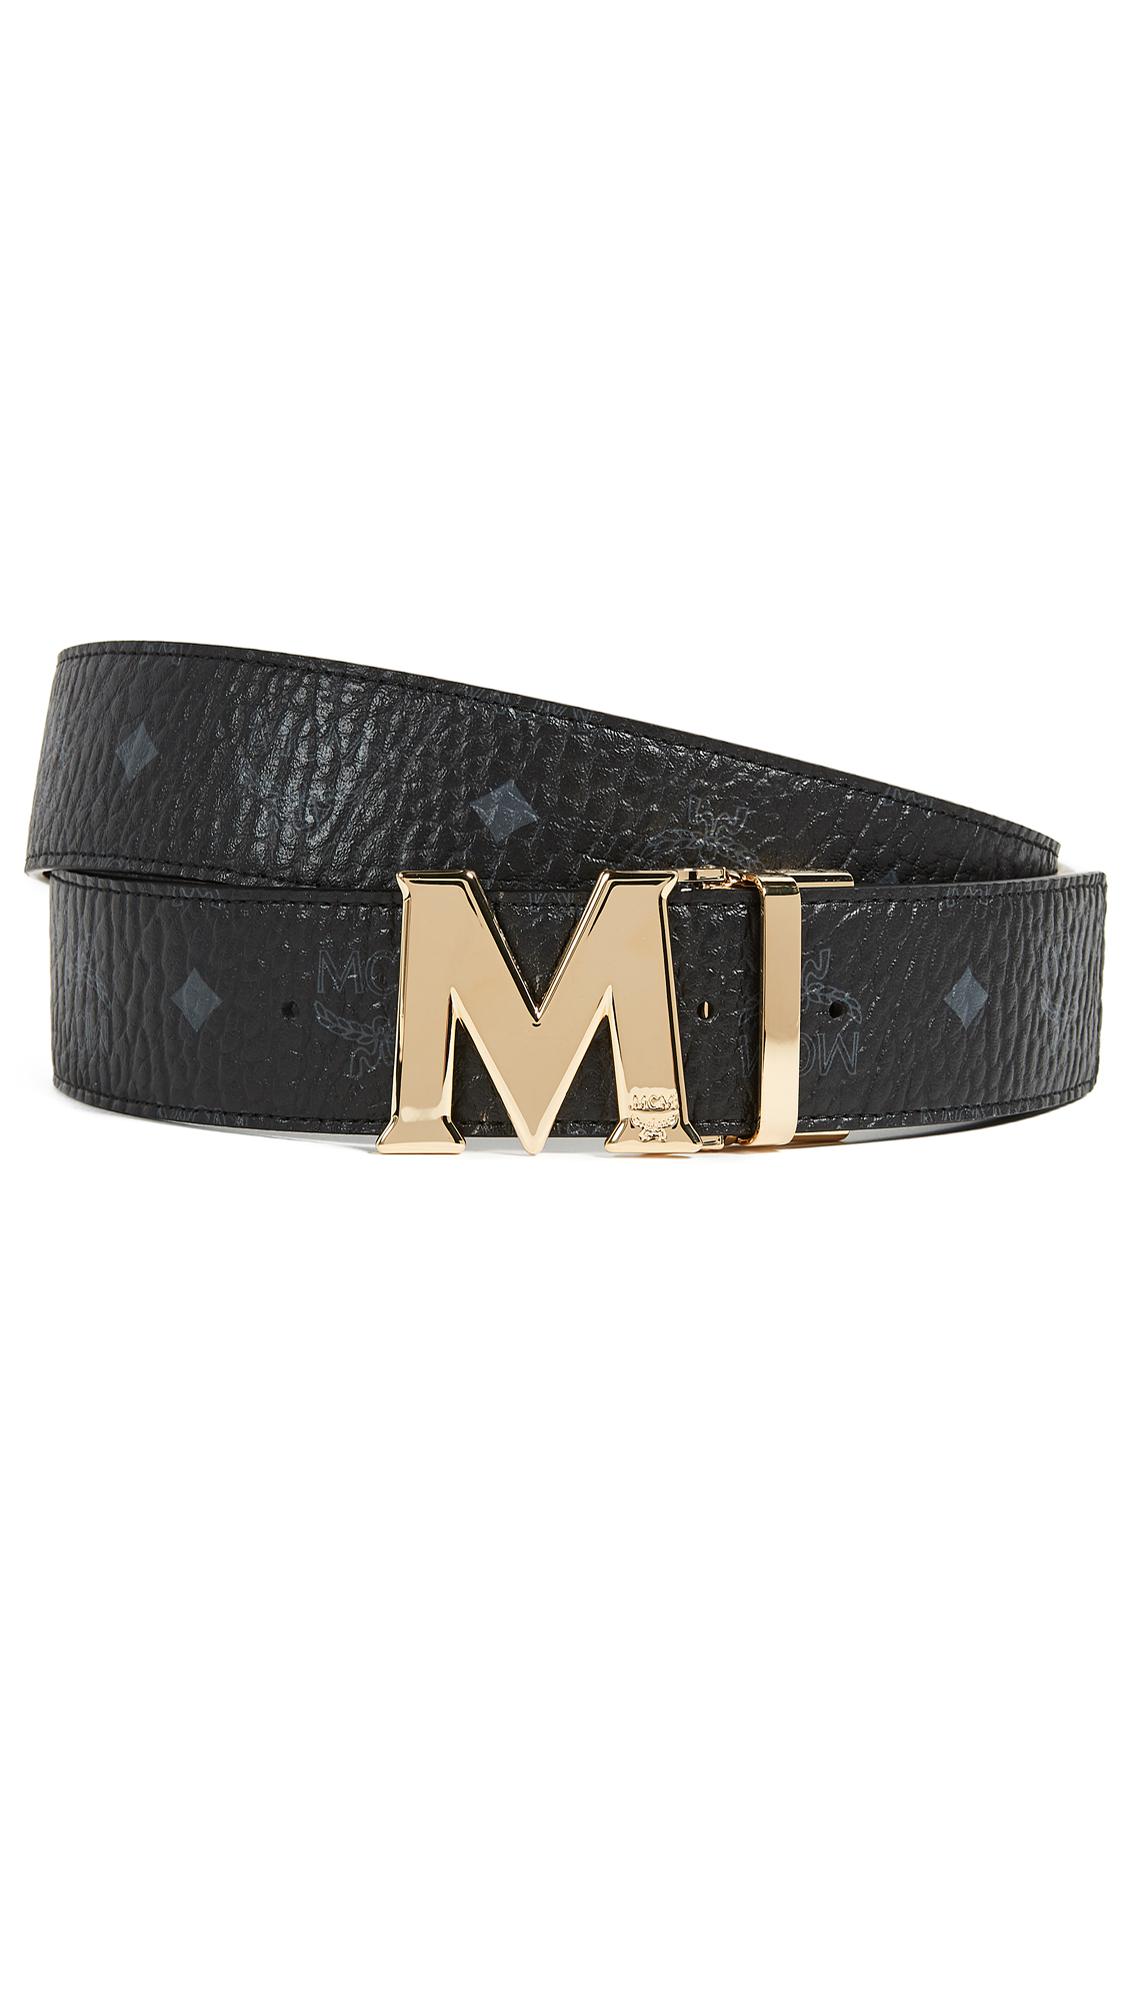 Lyst - Mcm Gold M Buckle Reversible Belt in Black for Men